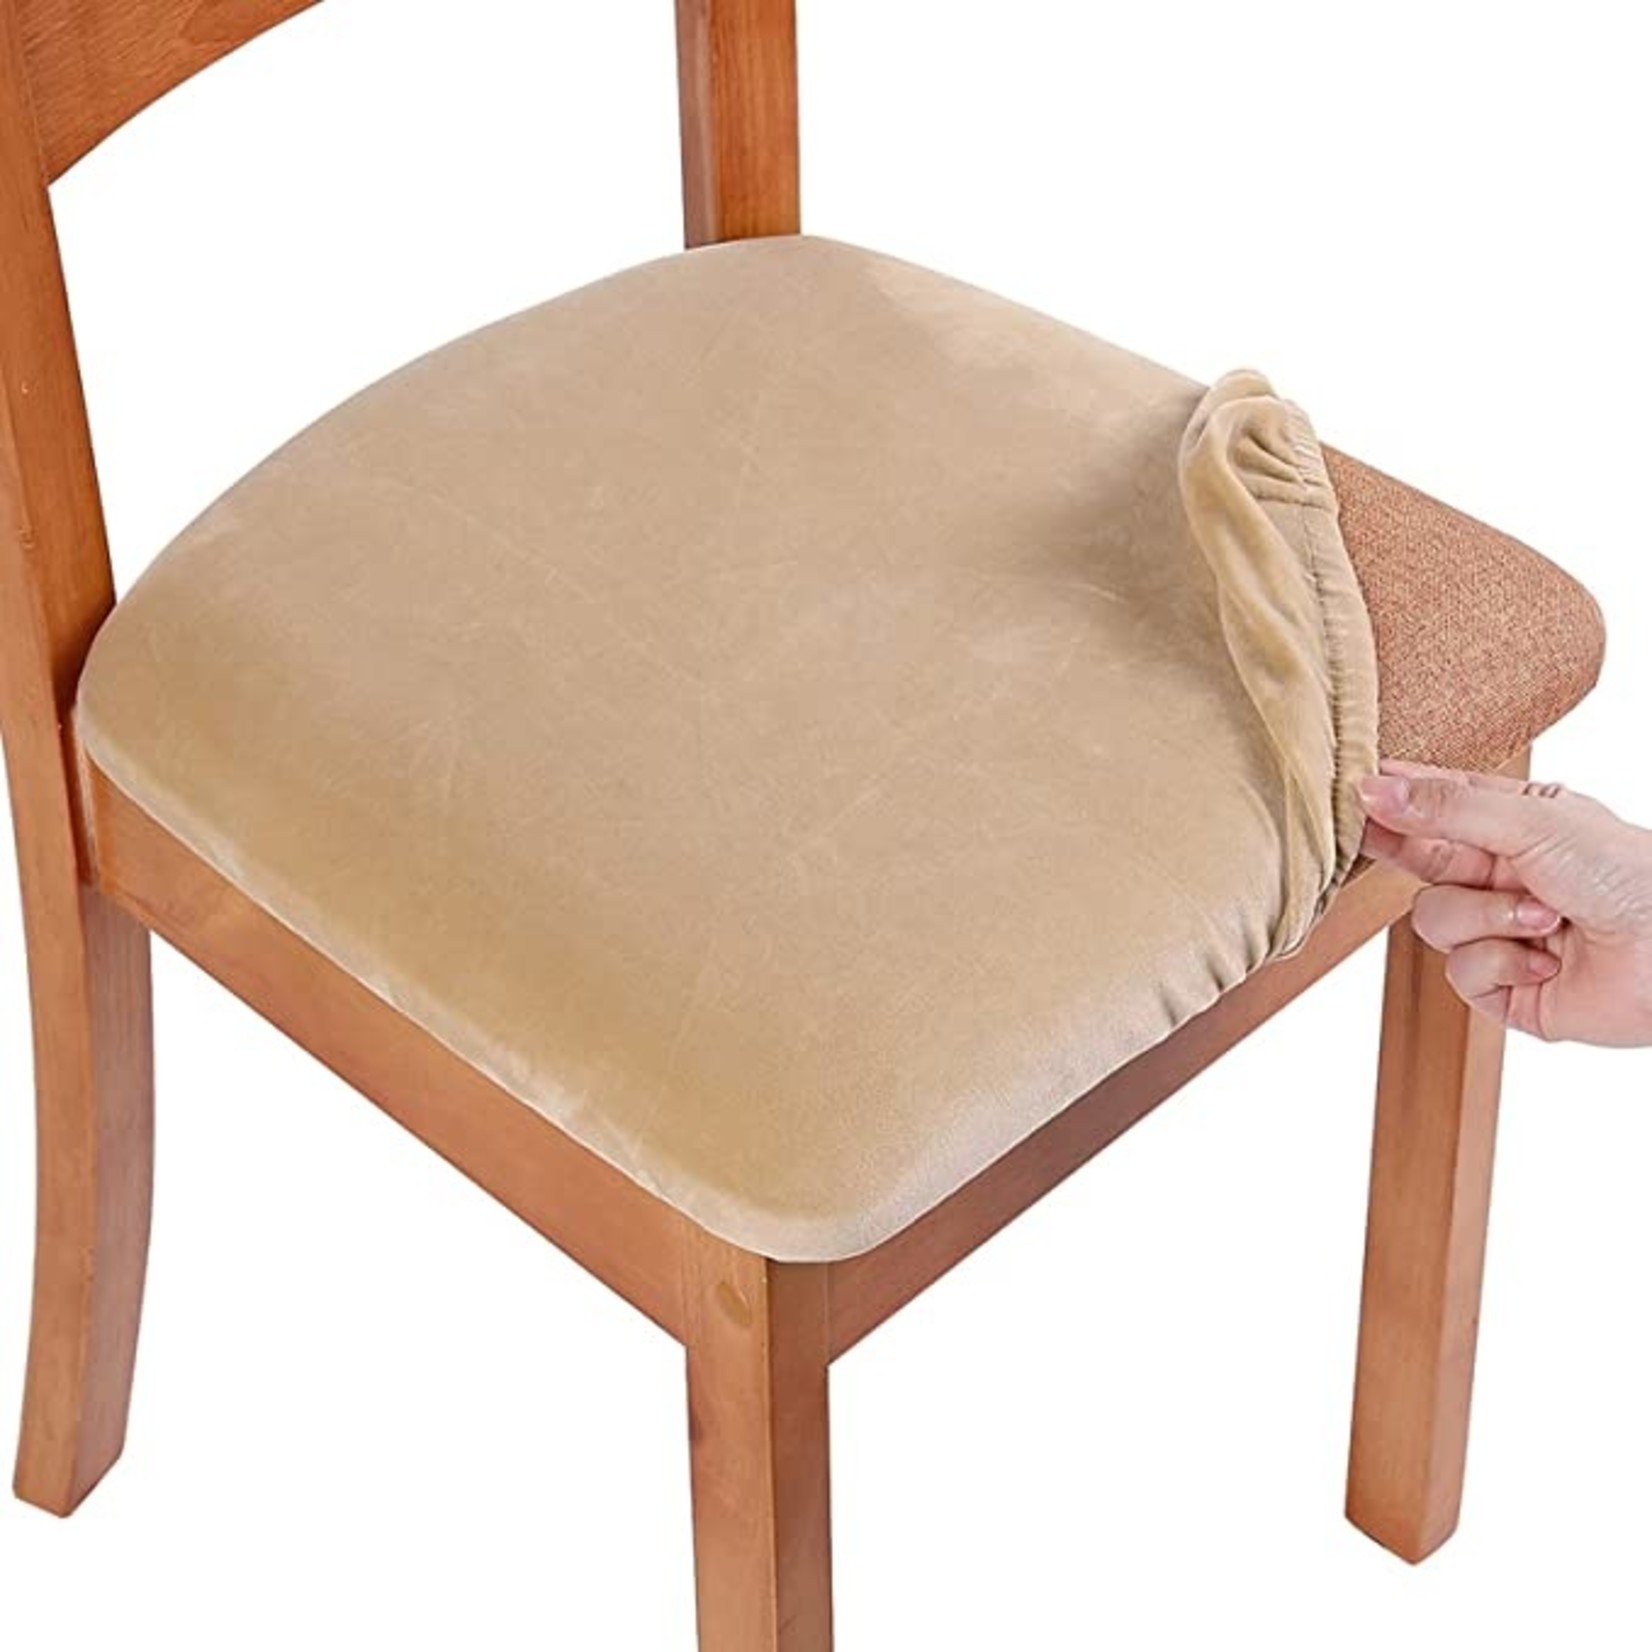 smiry Velvet Dining Chair Seat Covers- 4 Pcs